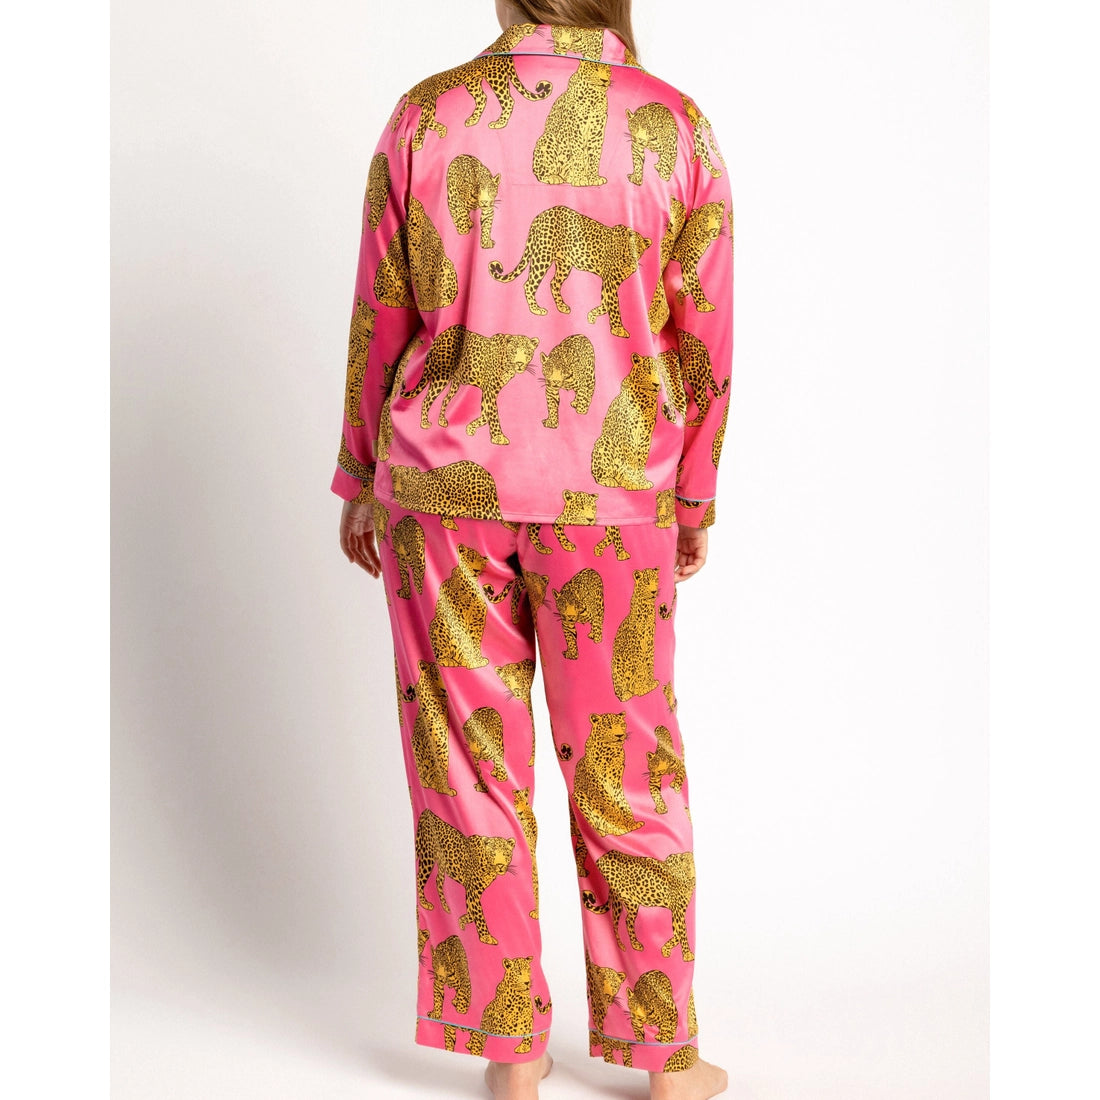 Pink Satin Leopard Button-Up Pajama Set